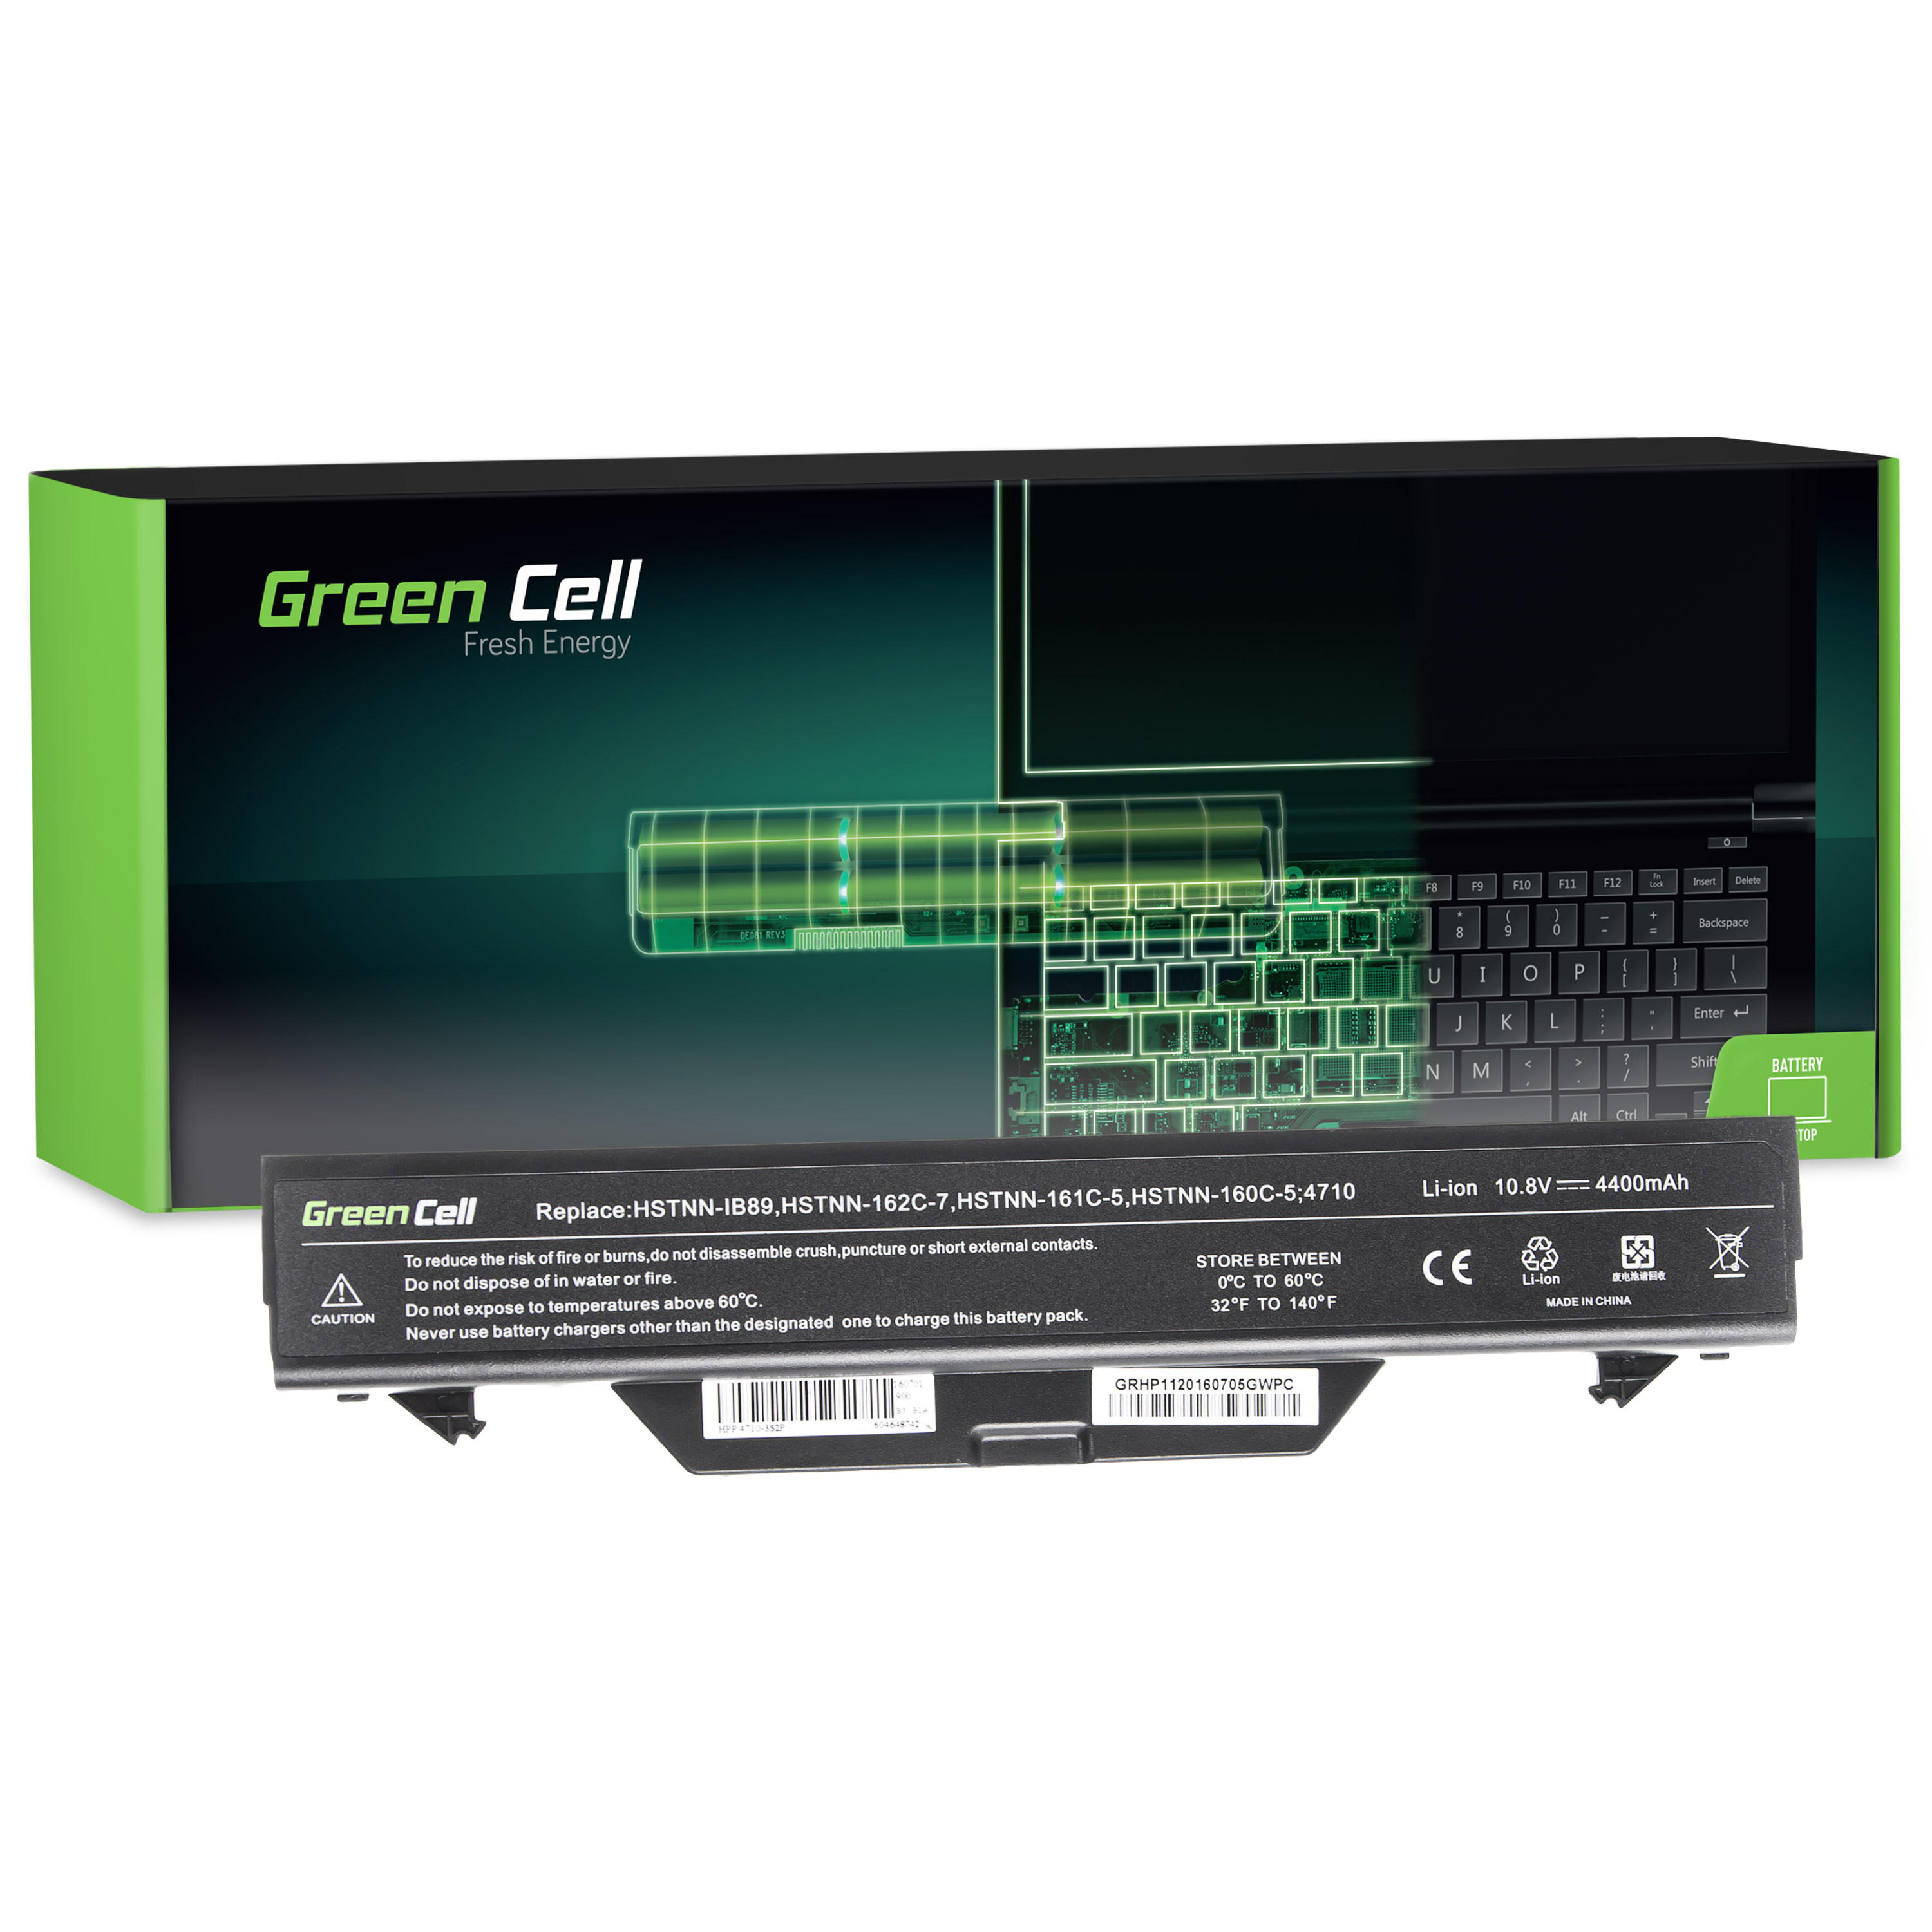 *Green Cell HP11 Baterie HP Probook 4510 4510s 4515s 4710s 4400mAh Li-ion